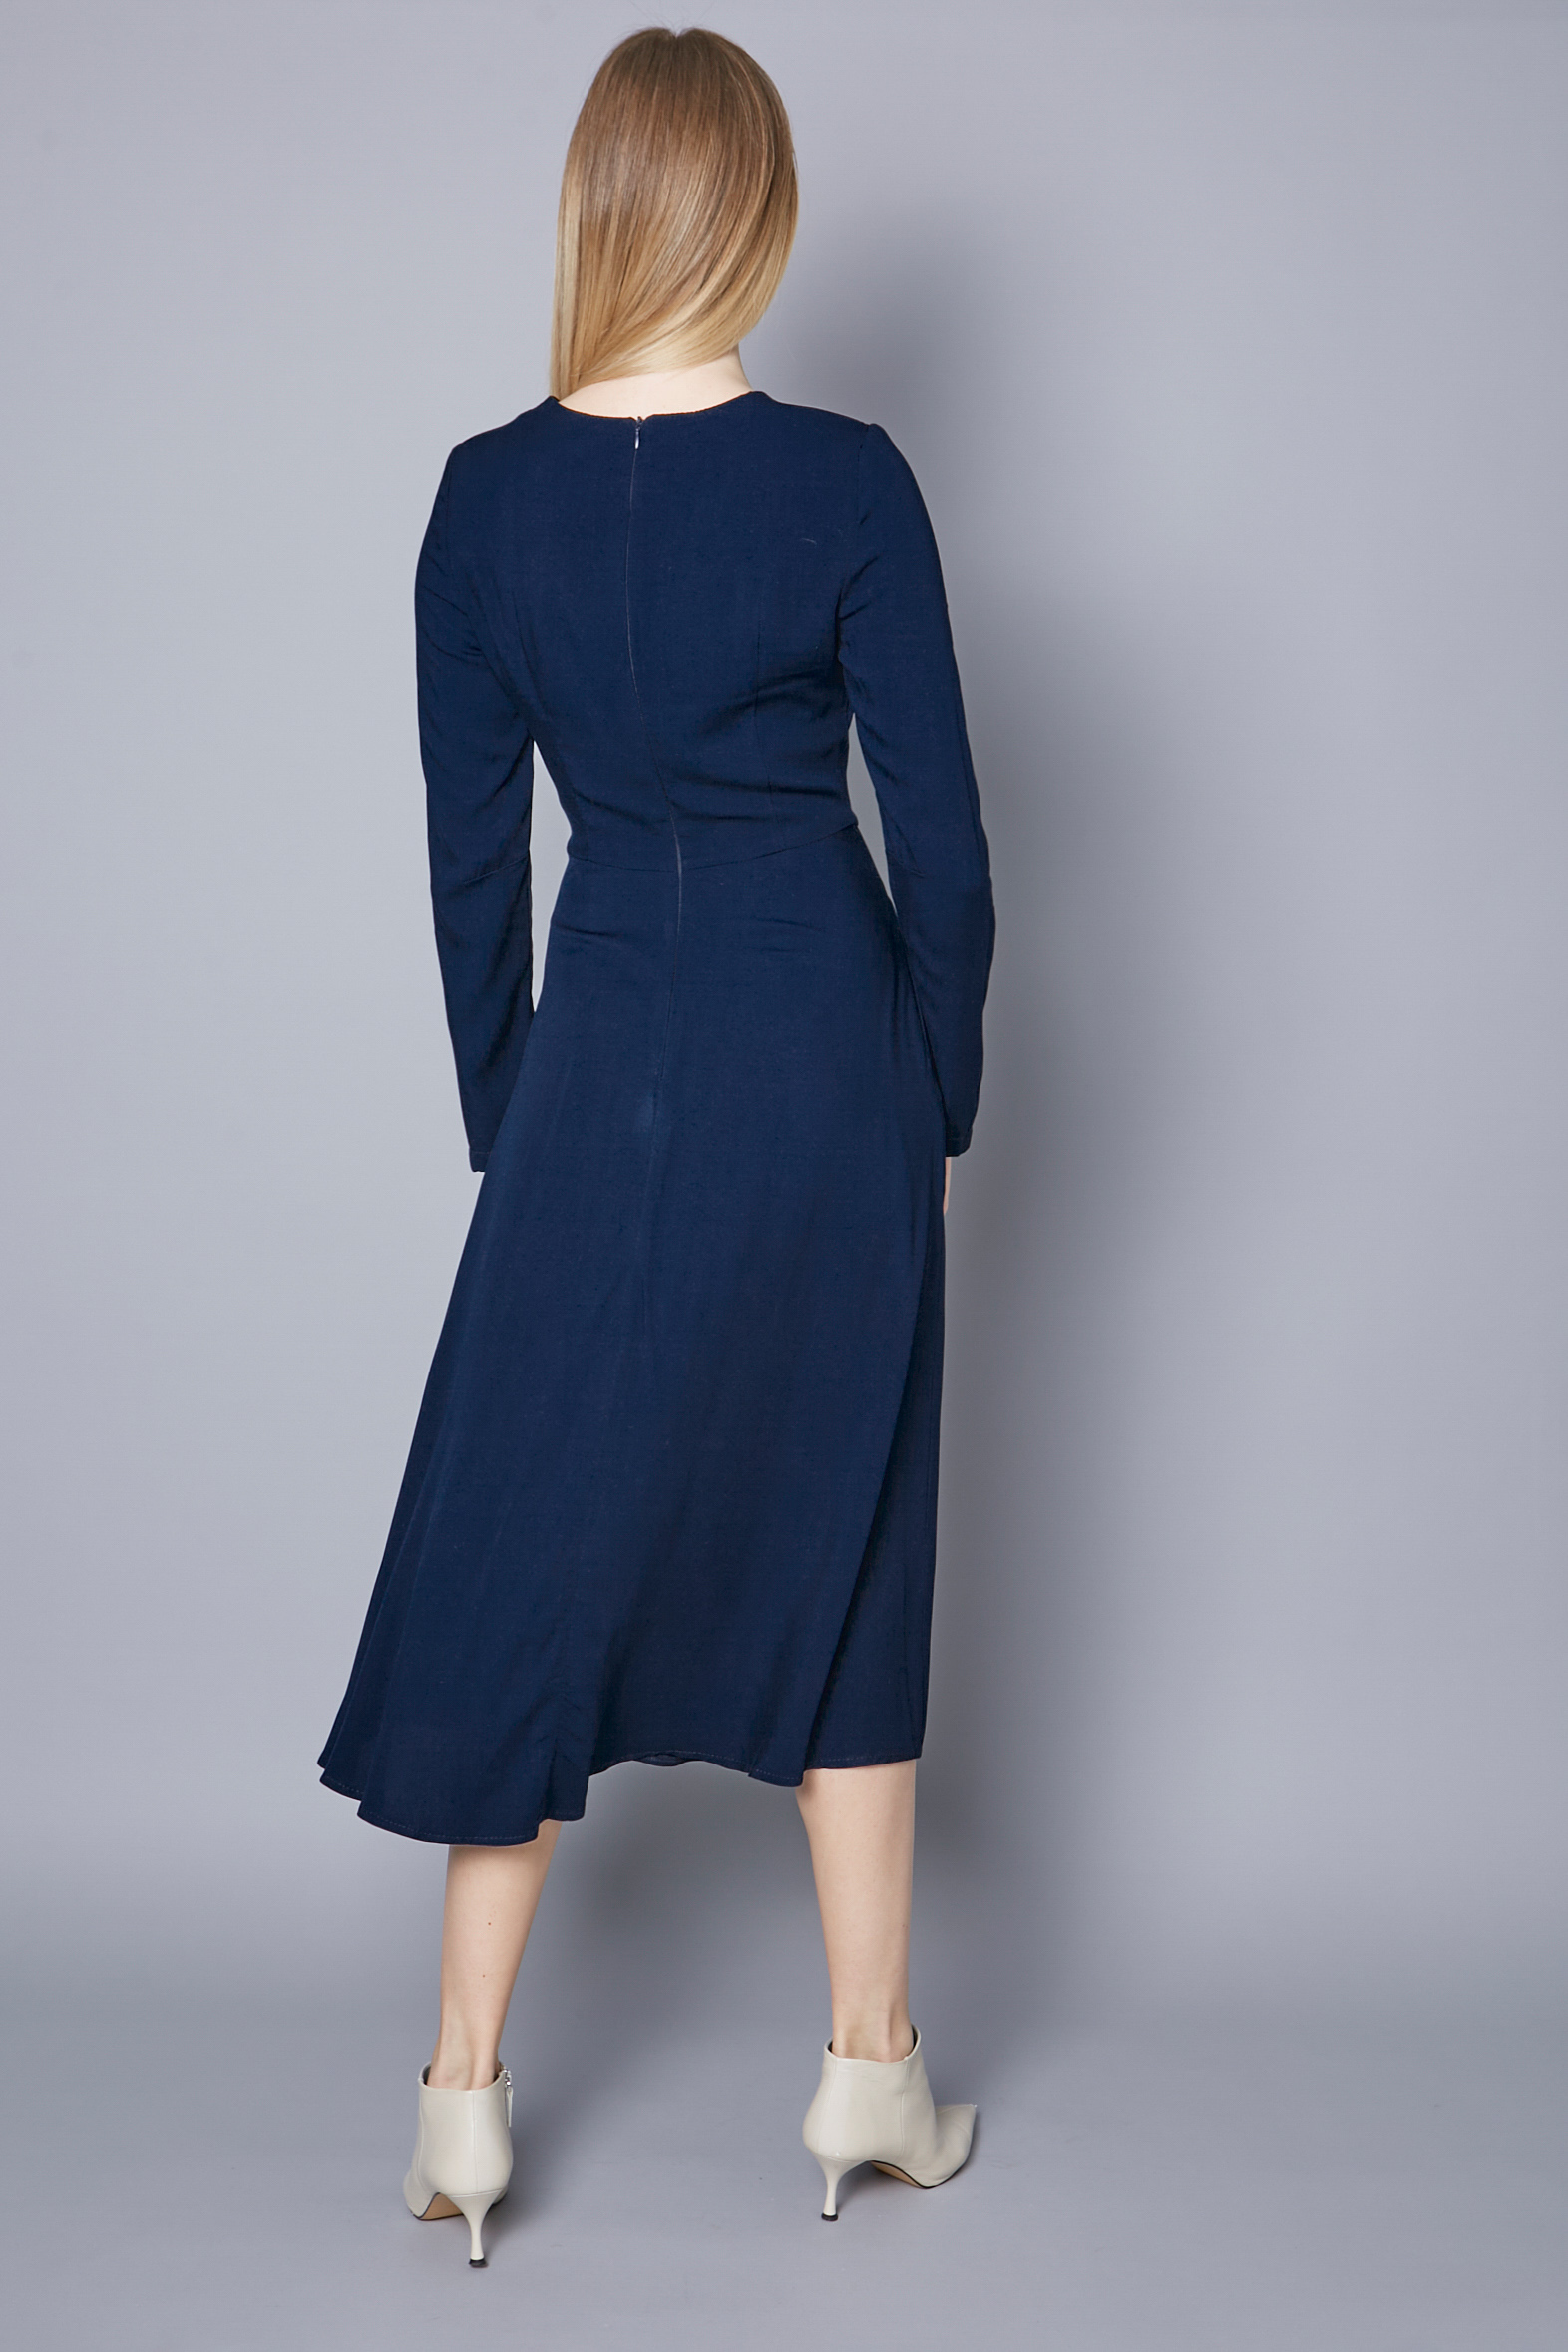 Blue midi dress with long sleeves, photo 4